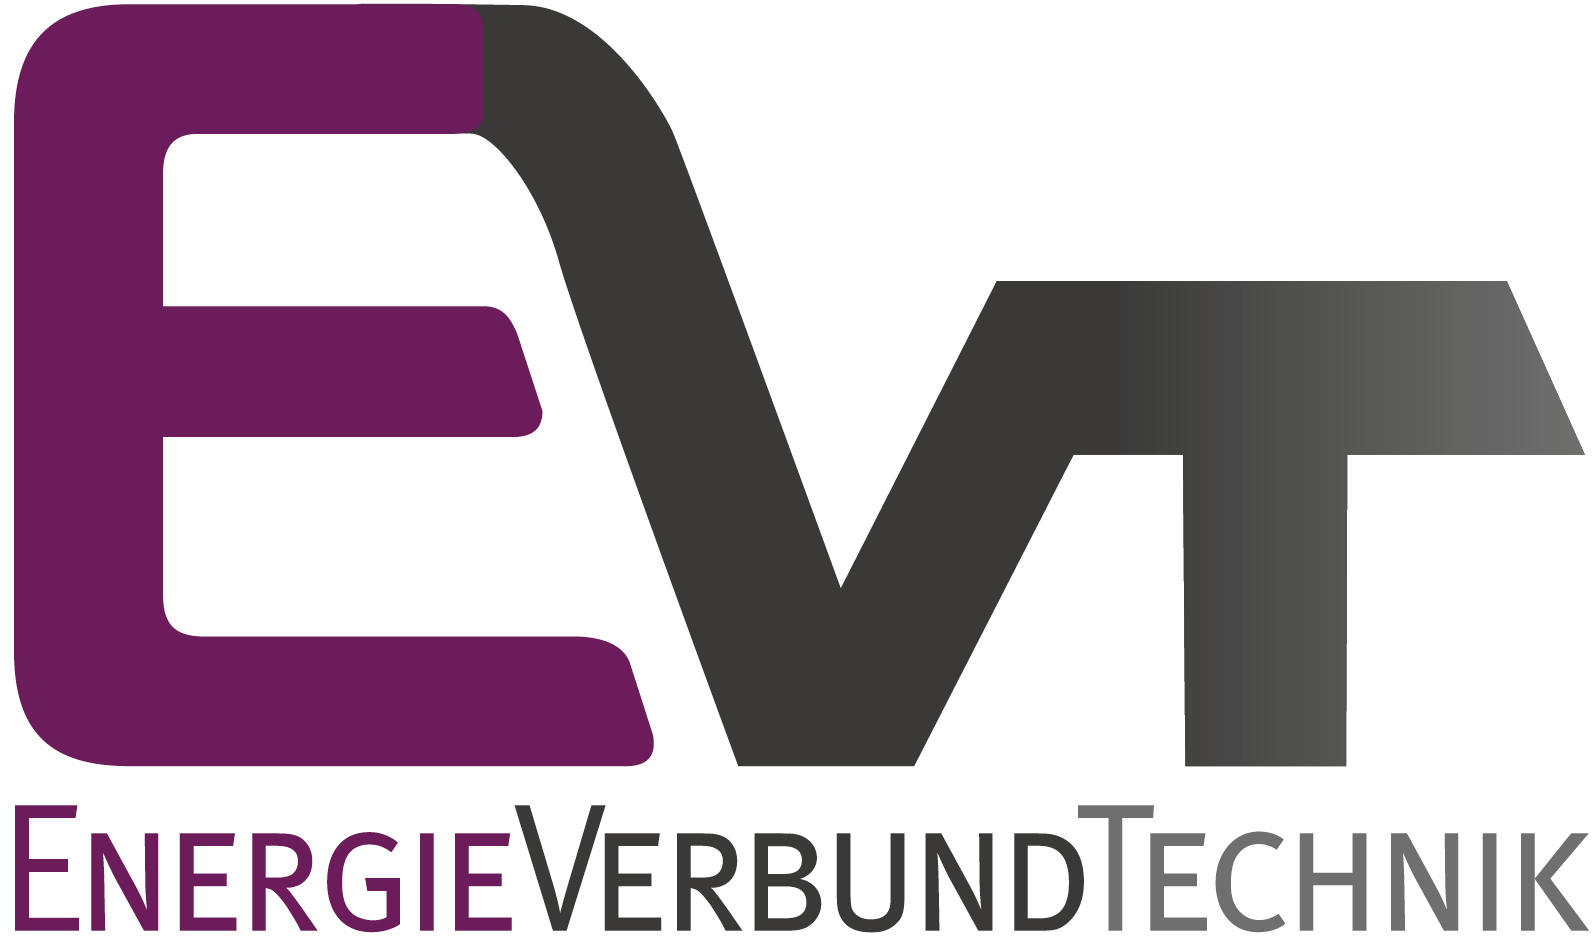 Universität Leoben – Energieverbundtechnik (EVT)